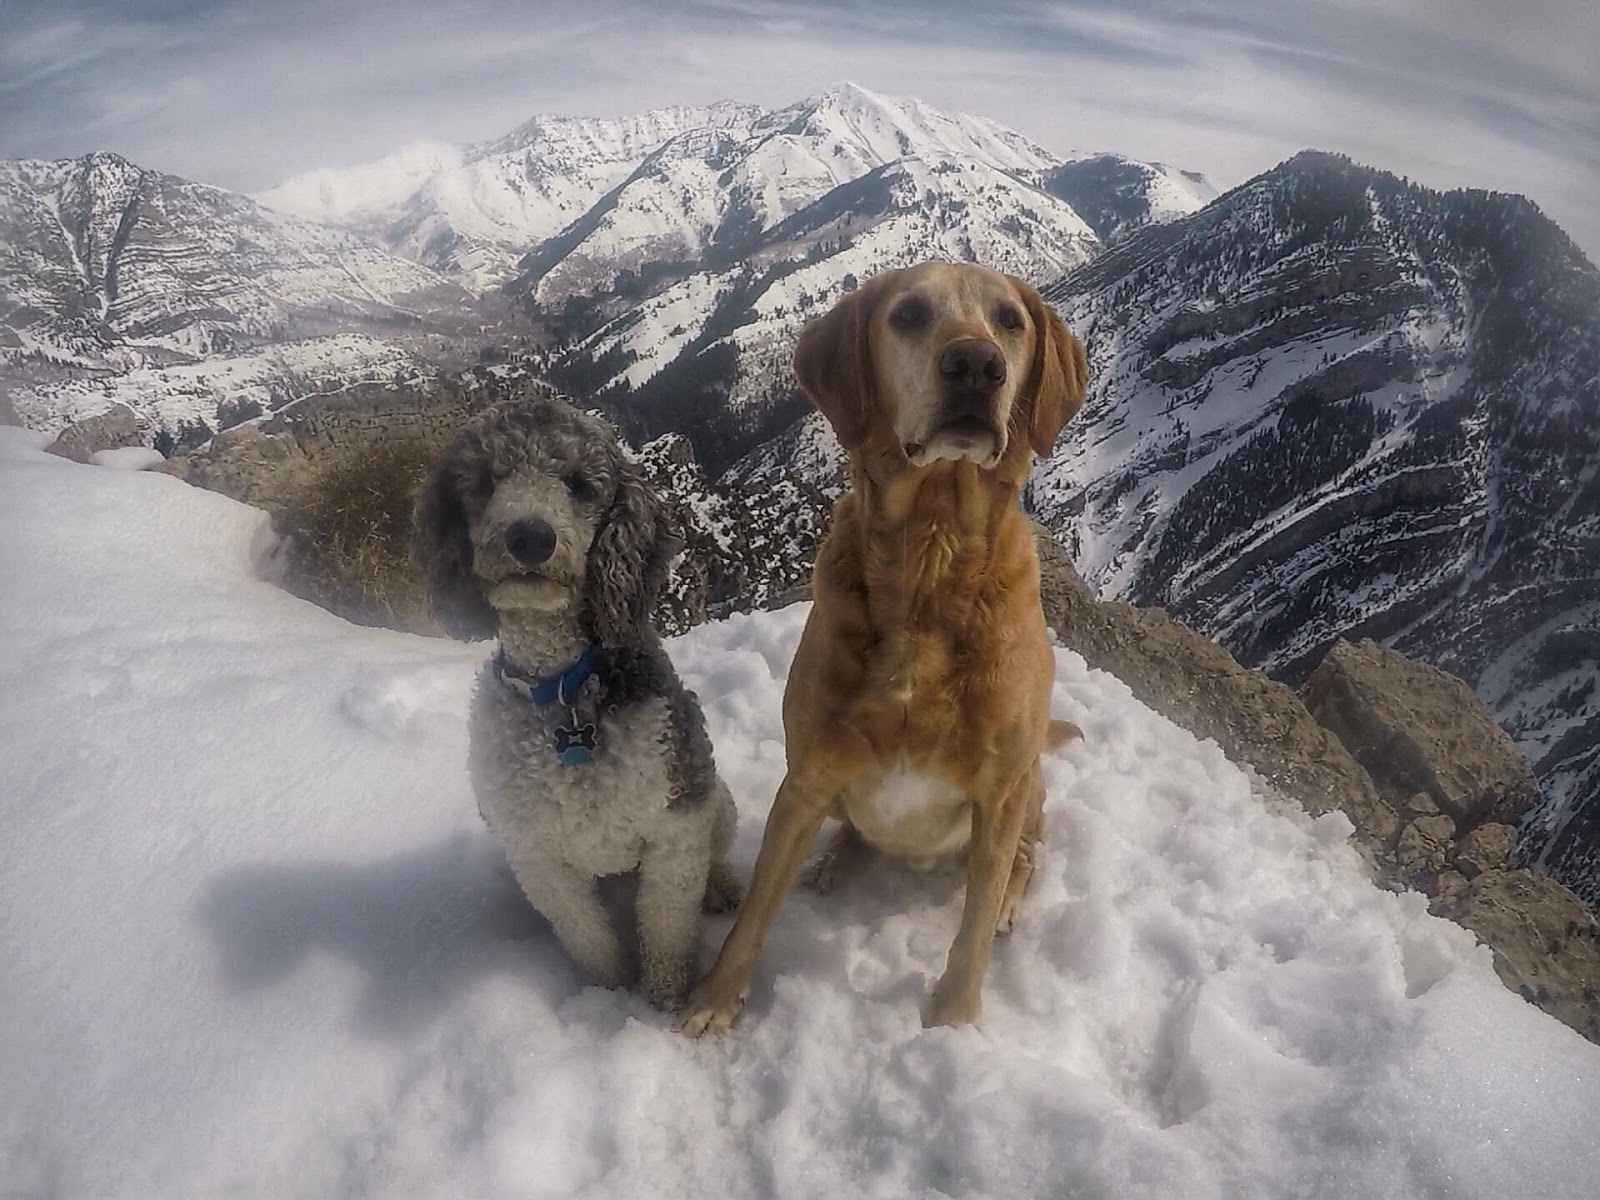 Hiking to Squaw Peak, Utah County, Hiking in Utah with Dogs